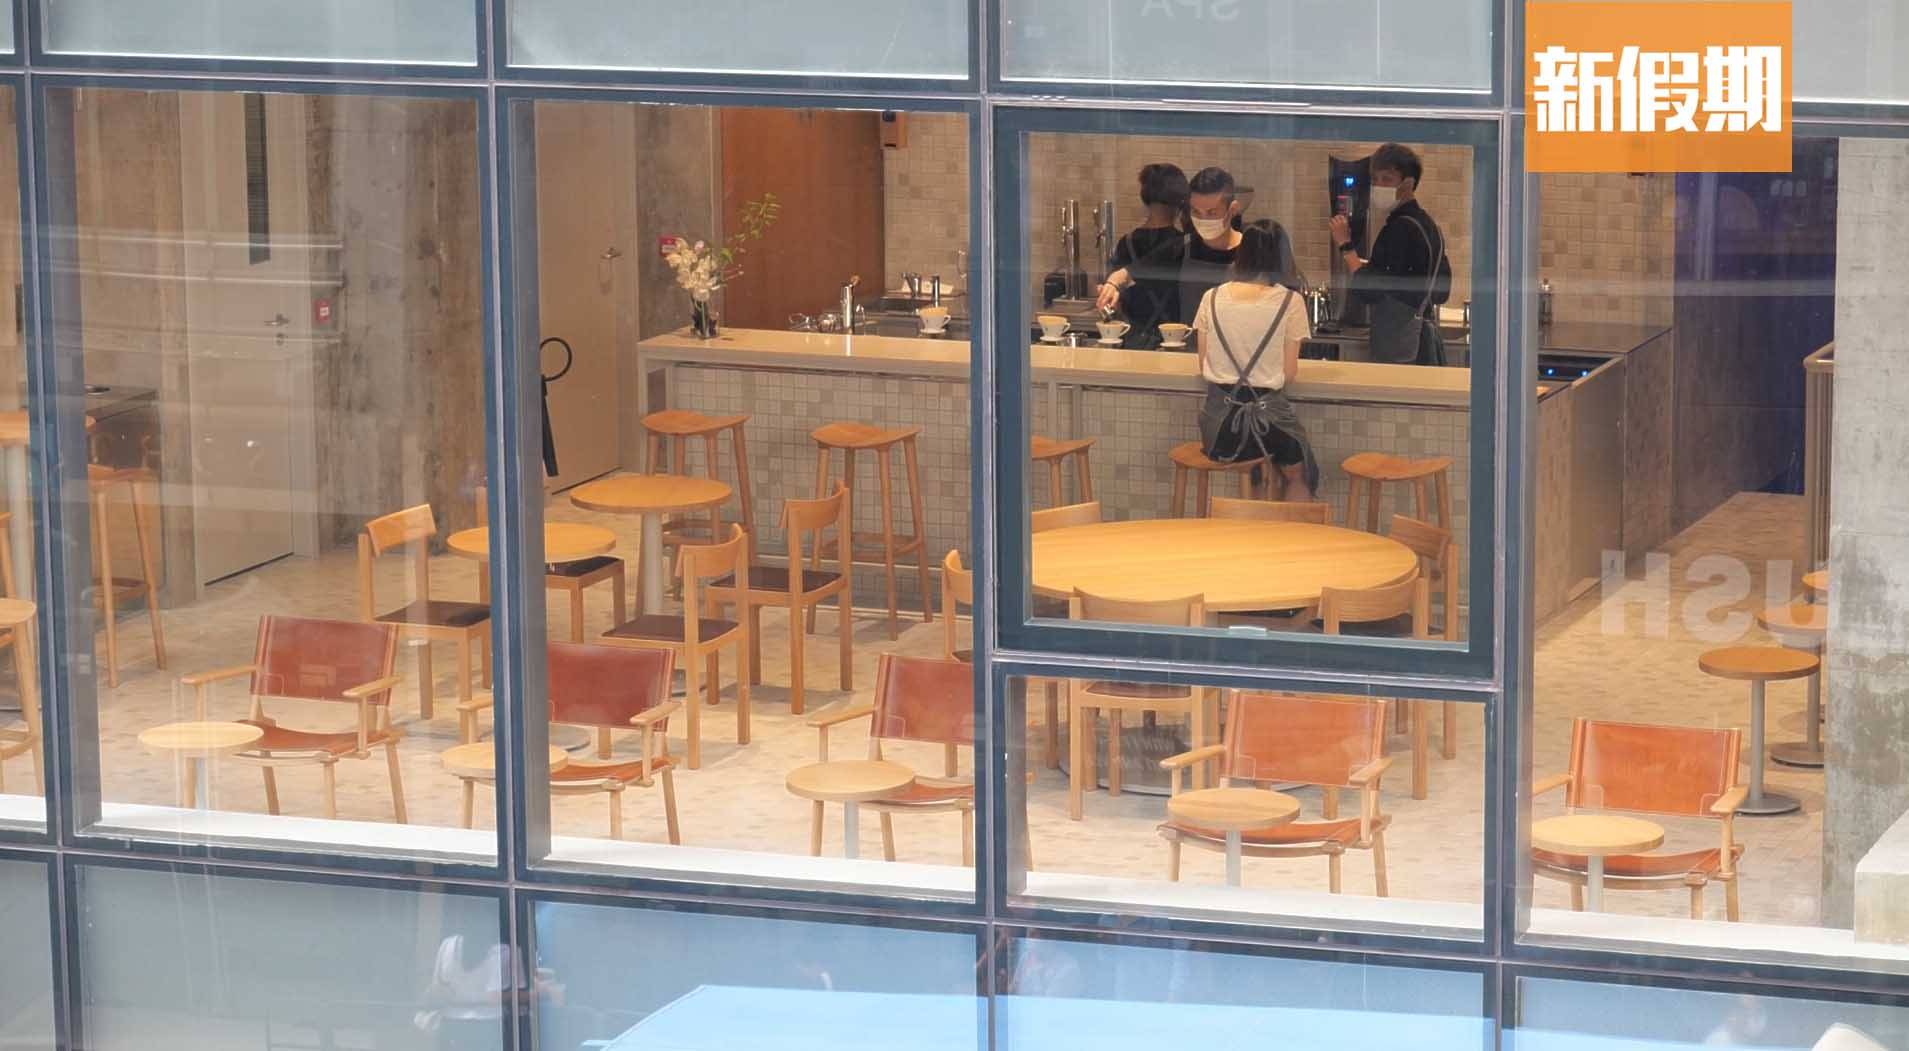 Blue Bottle 2樓設有數張木椅及木枱供客人堂食，可惜因疫情關係，暫時未能開放給公眾。